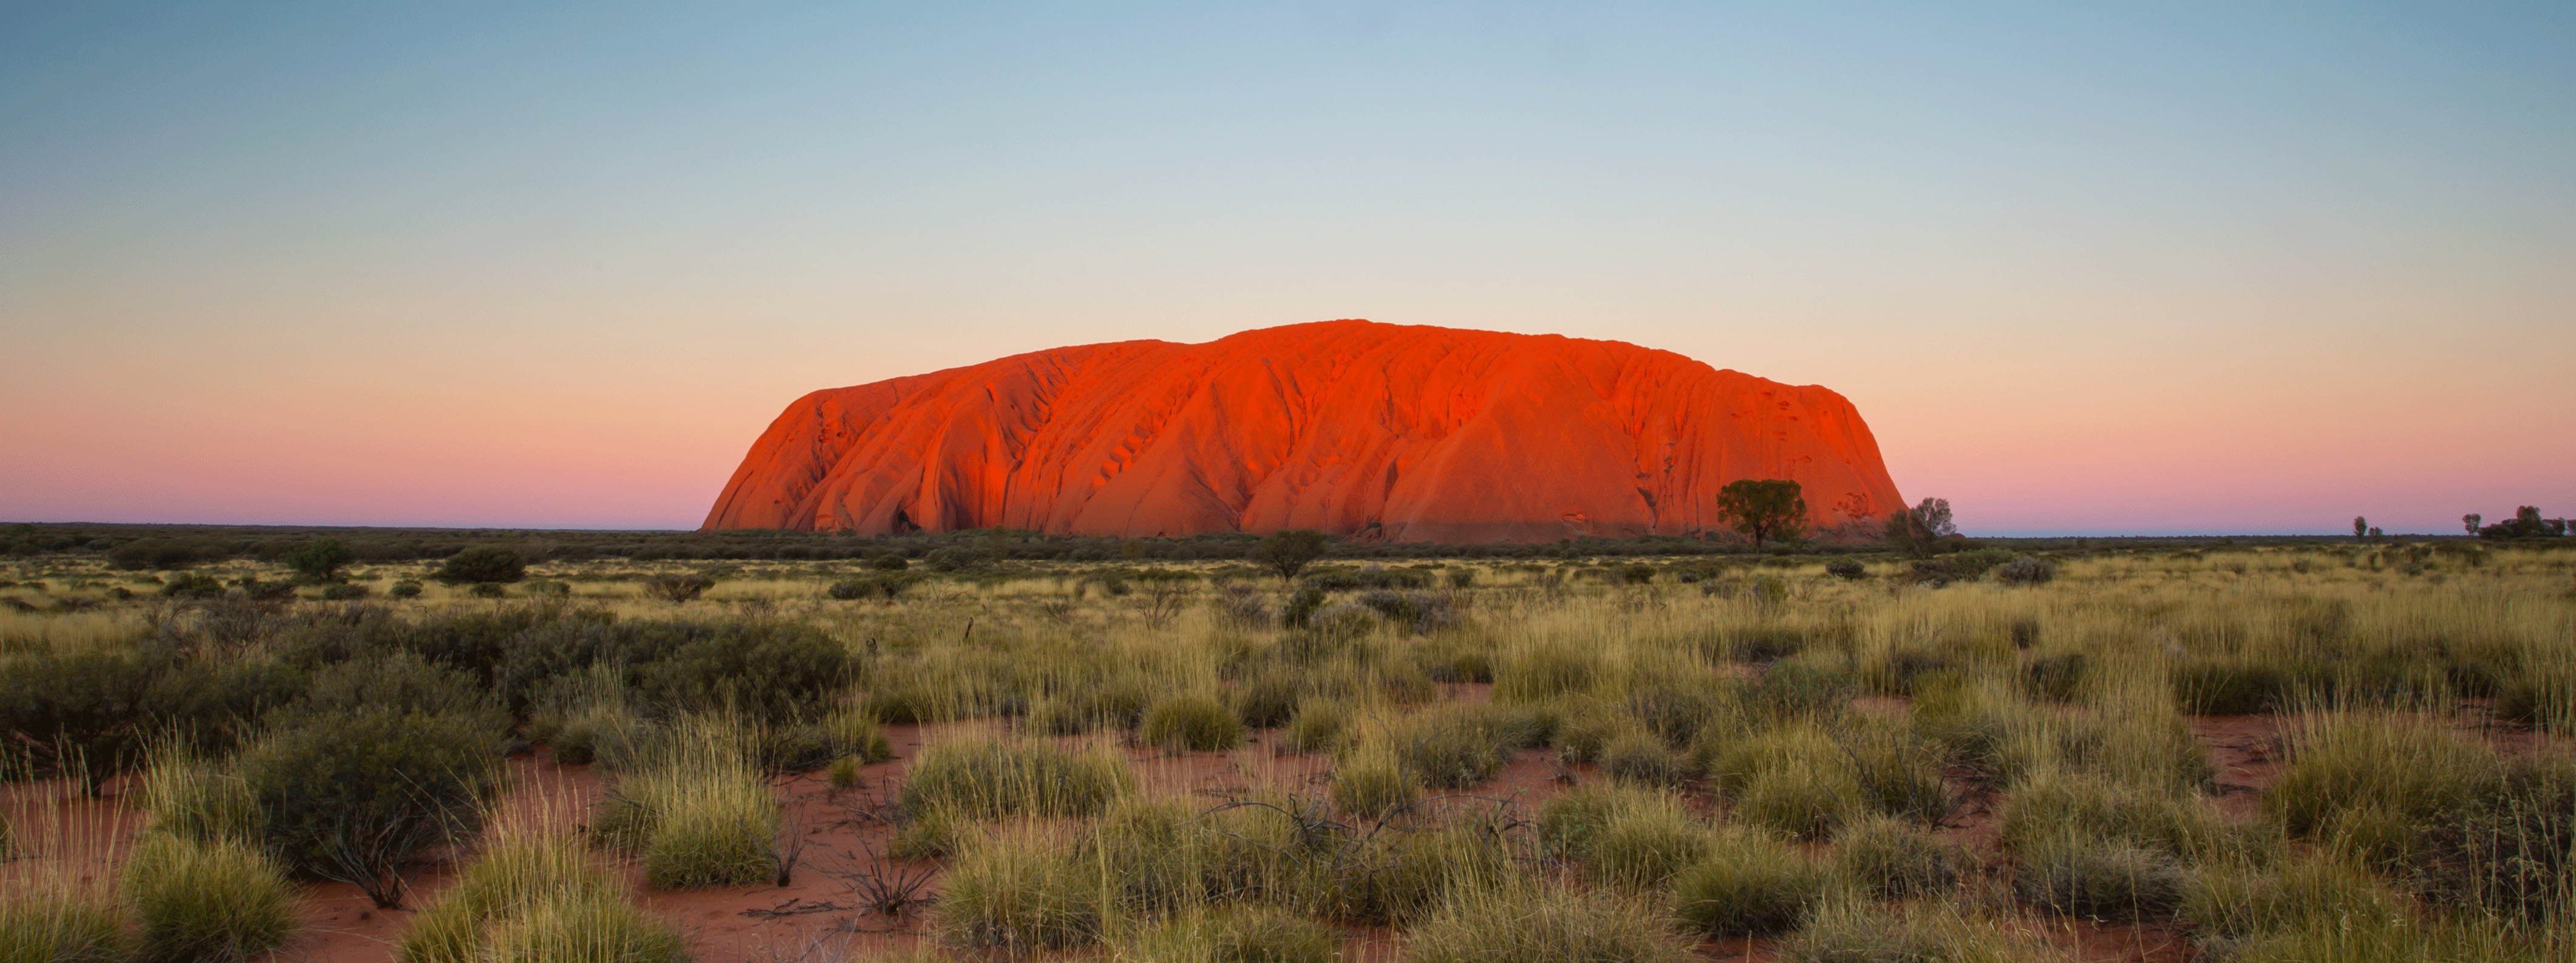 /resource/Images/australasia/australia/headerimage/Uluru--Ayers-Rock.png